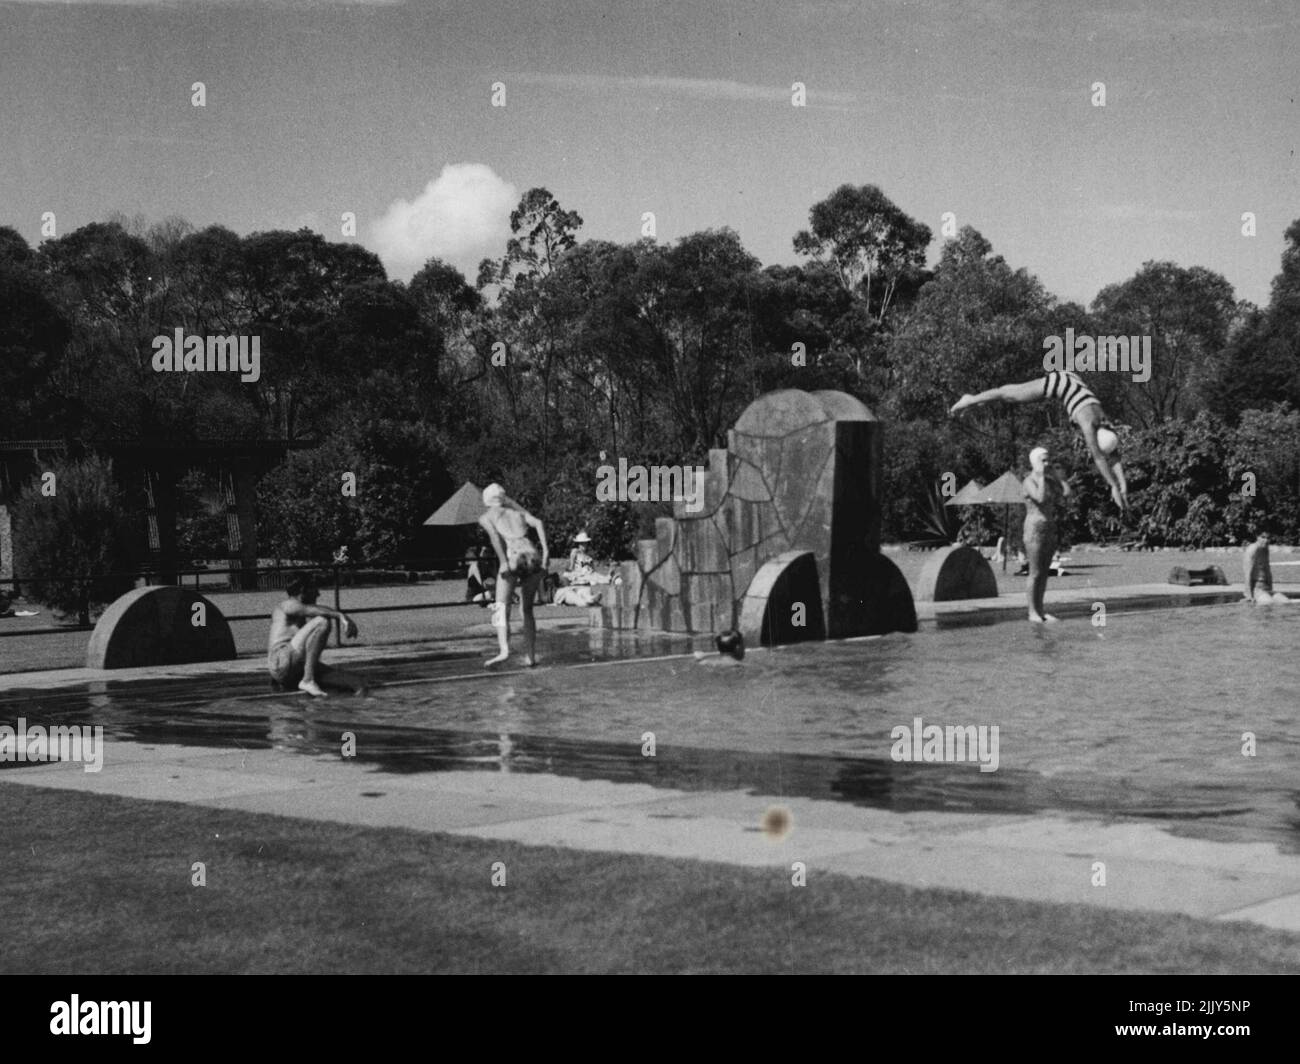 Oasis Swimming Pool - Brisbane And Suburbs. June 01, 1953. (Photo by David R. Jones). Stock Photo